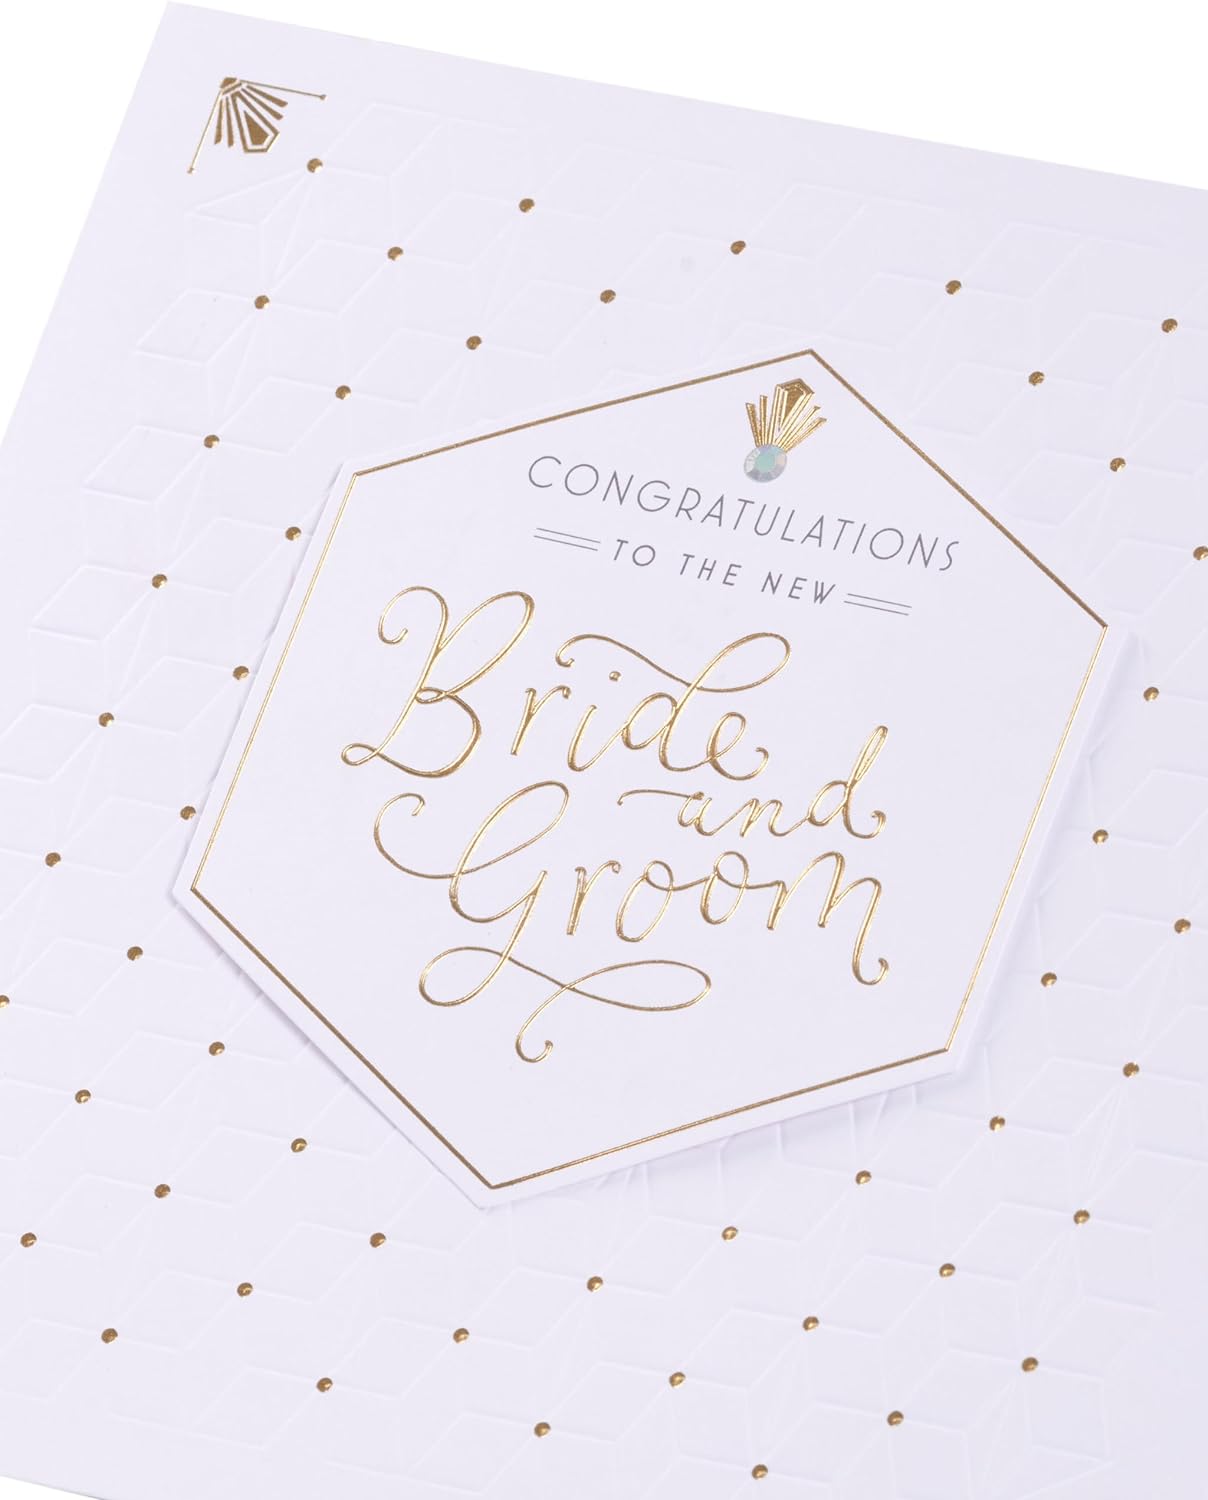 Embossed Congratulations Design for Bride & Groom Wedding Day Card